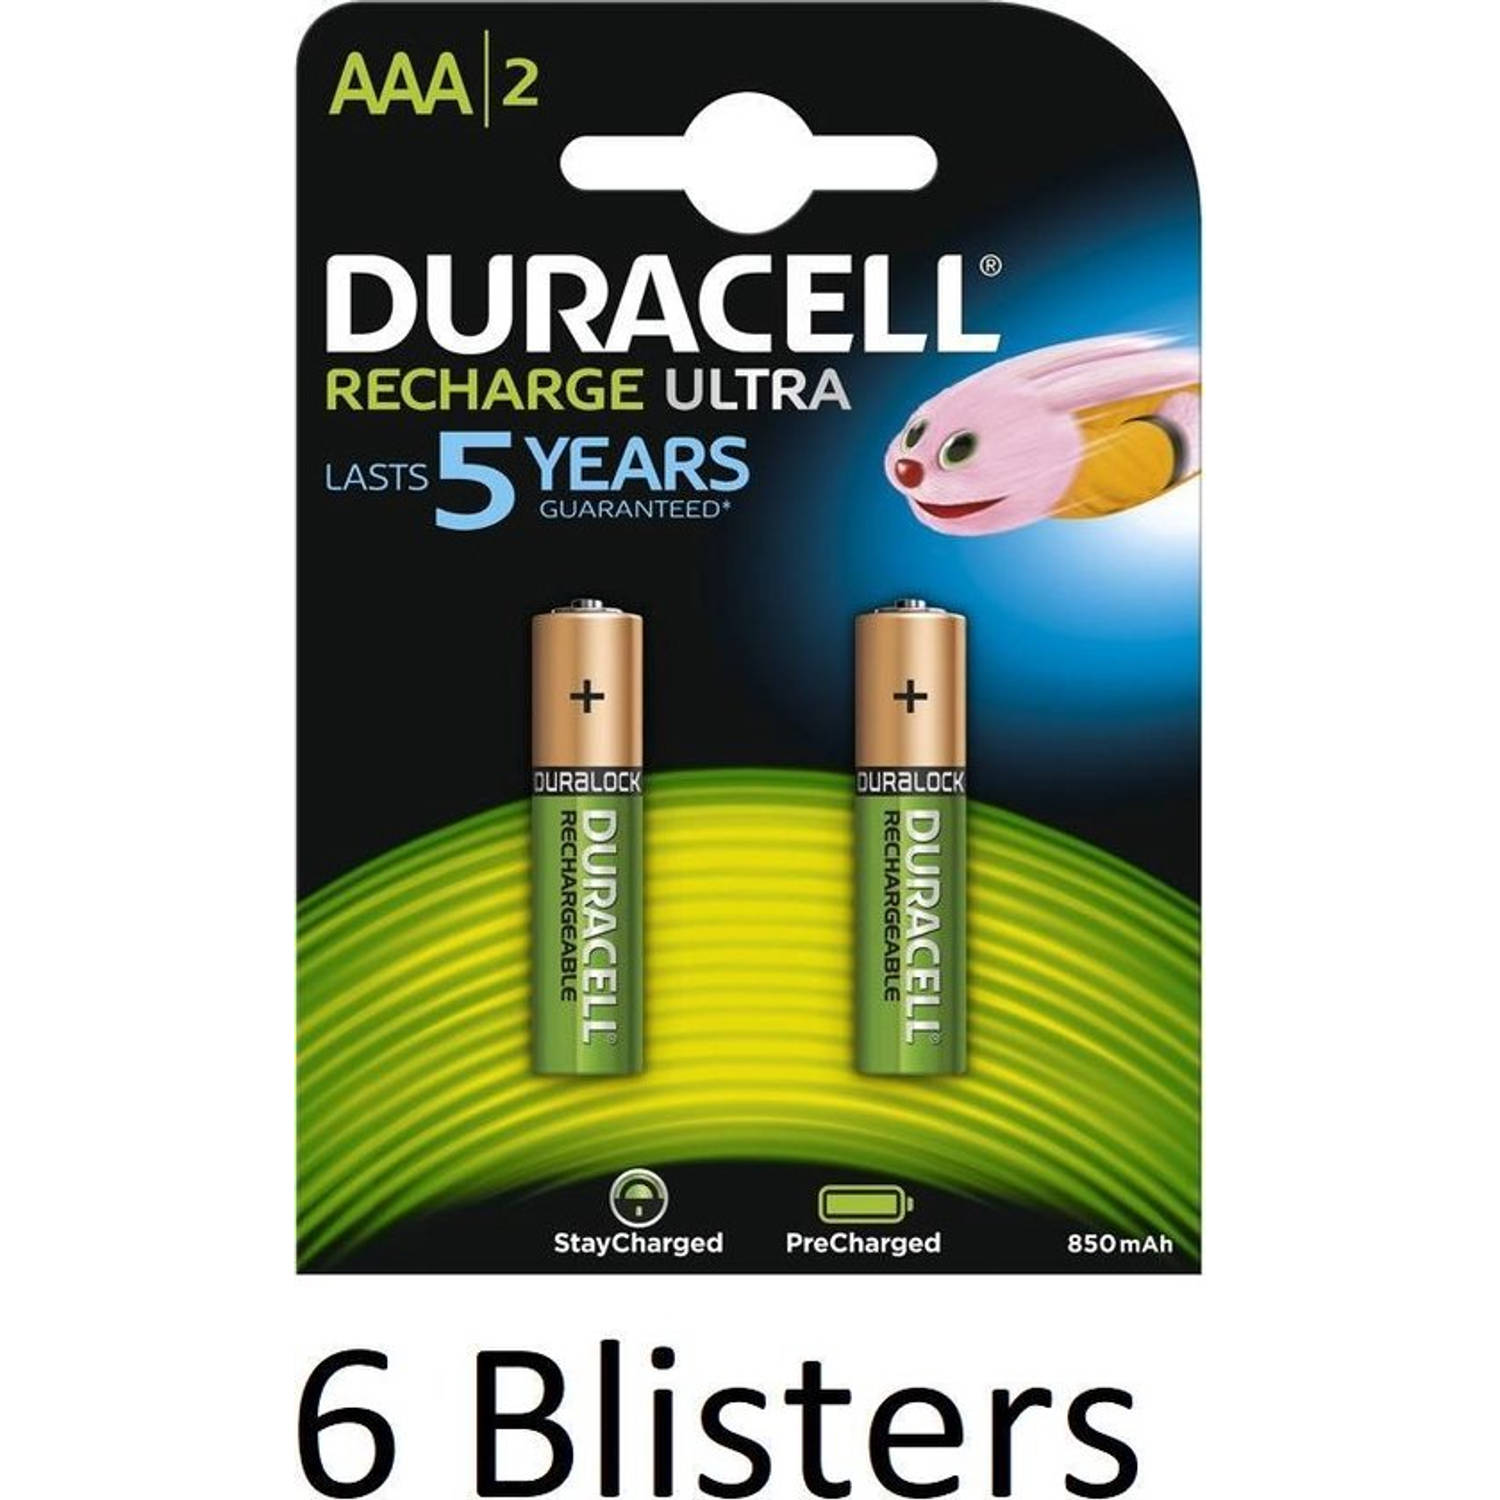 12 Stuks (6 Blisters a 2 st) Duracell AAA Oplaadbare Batterijen - 850 mAh